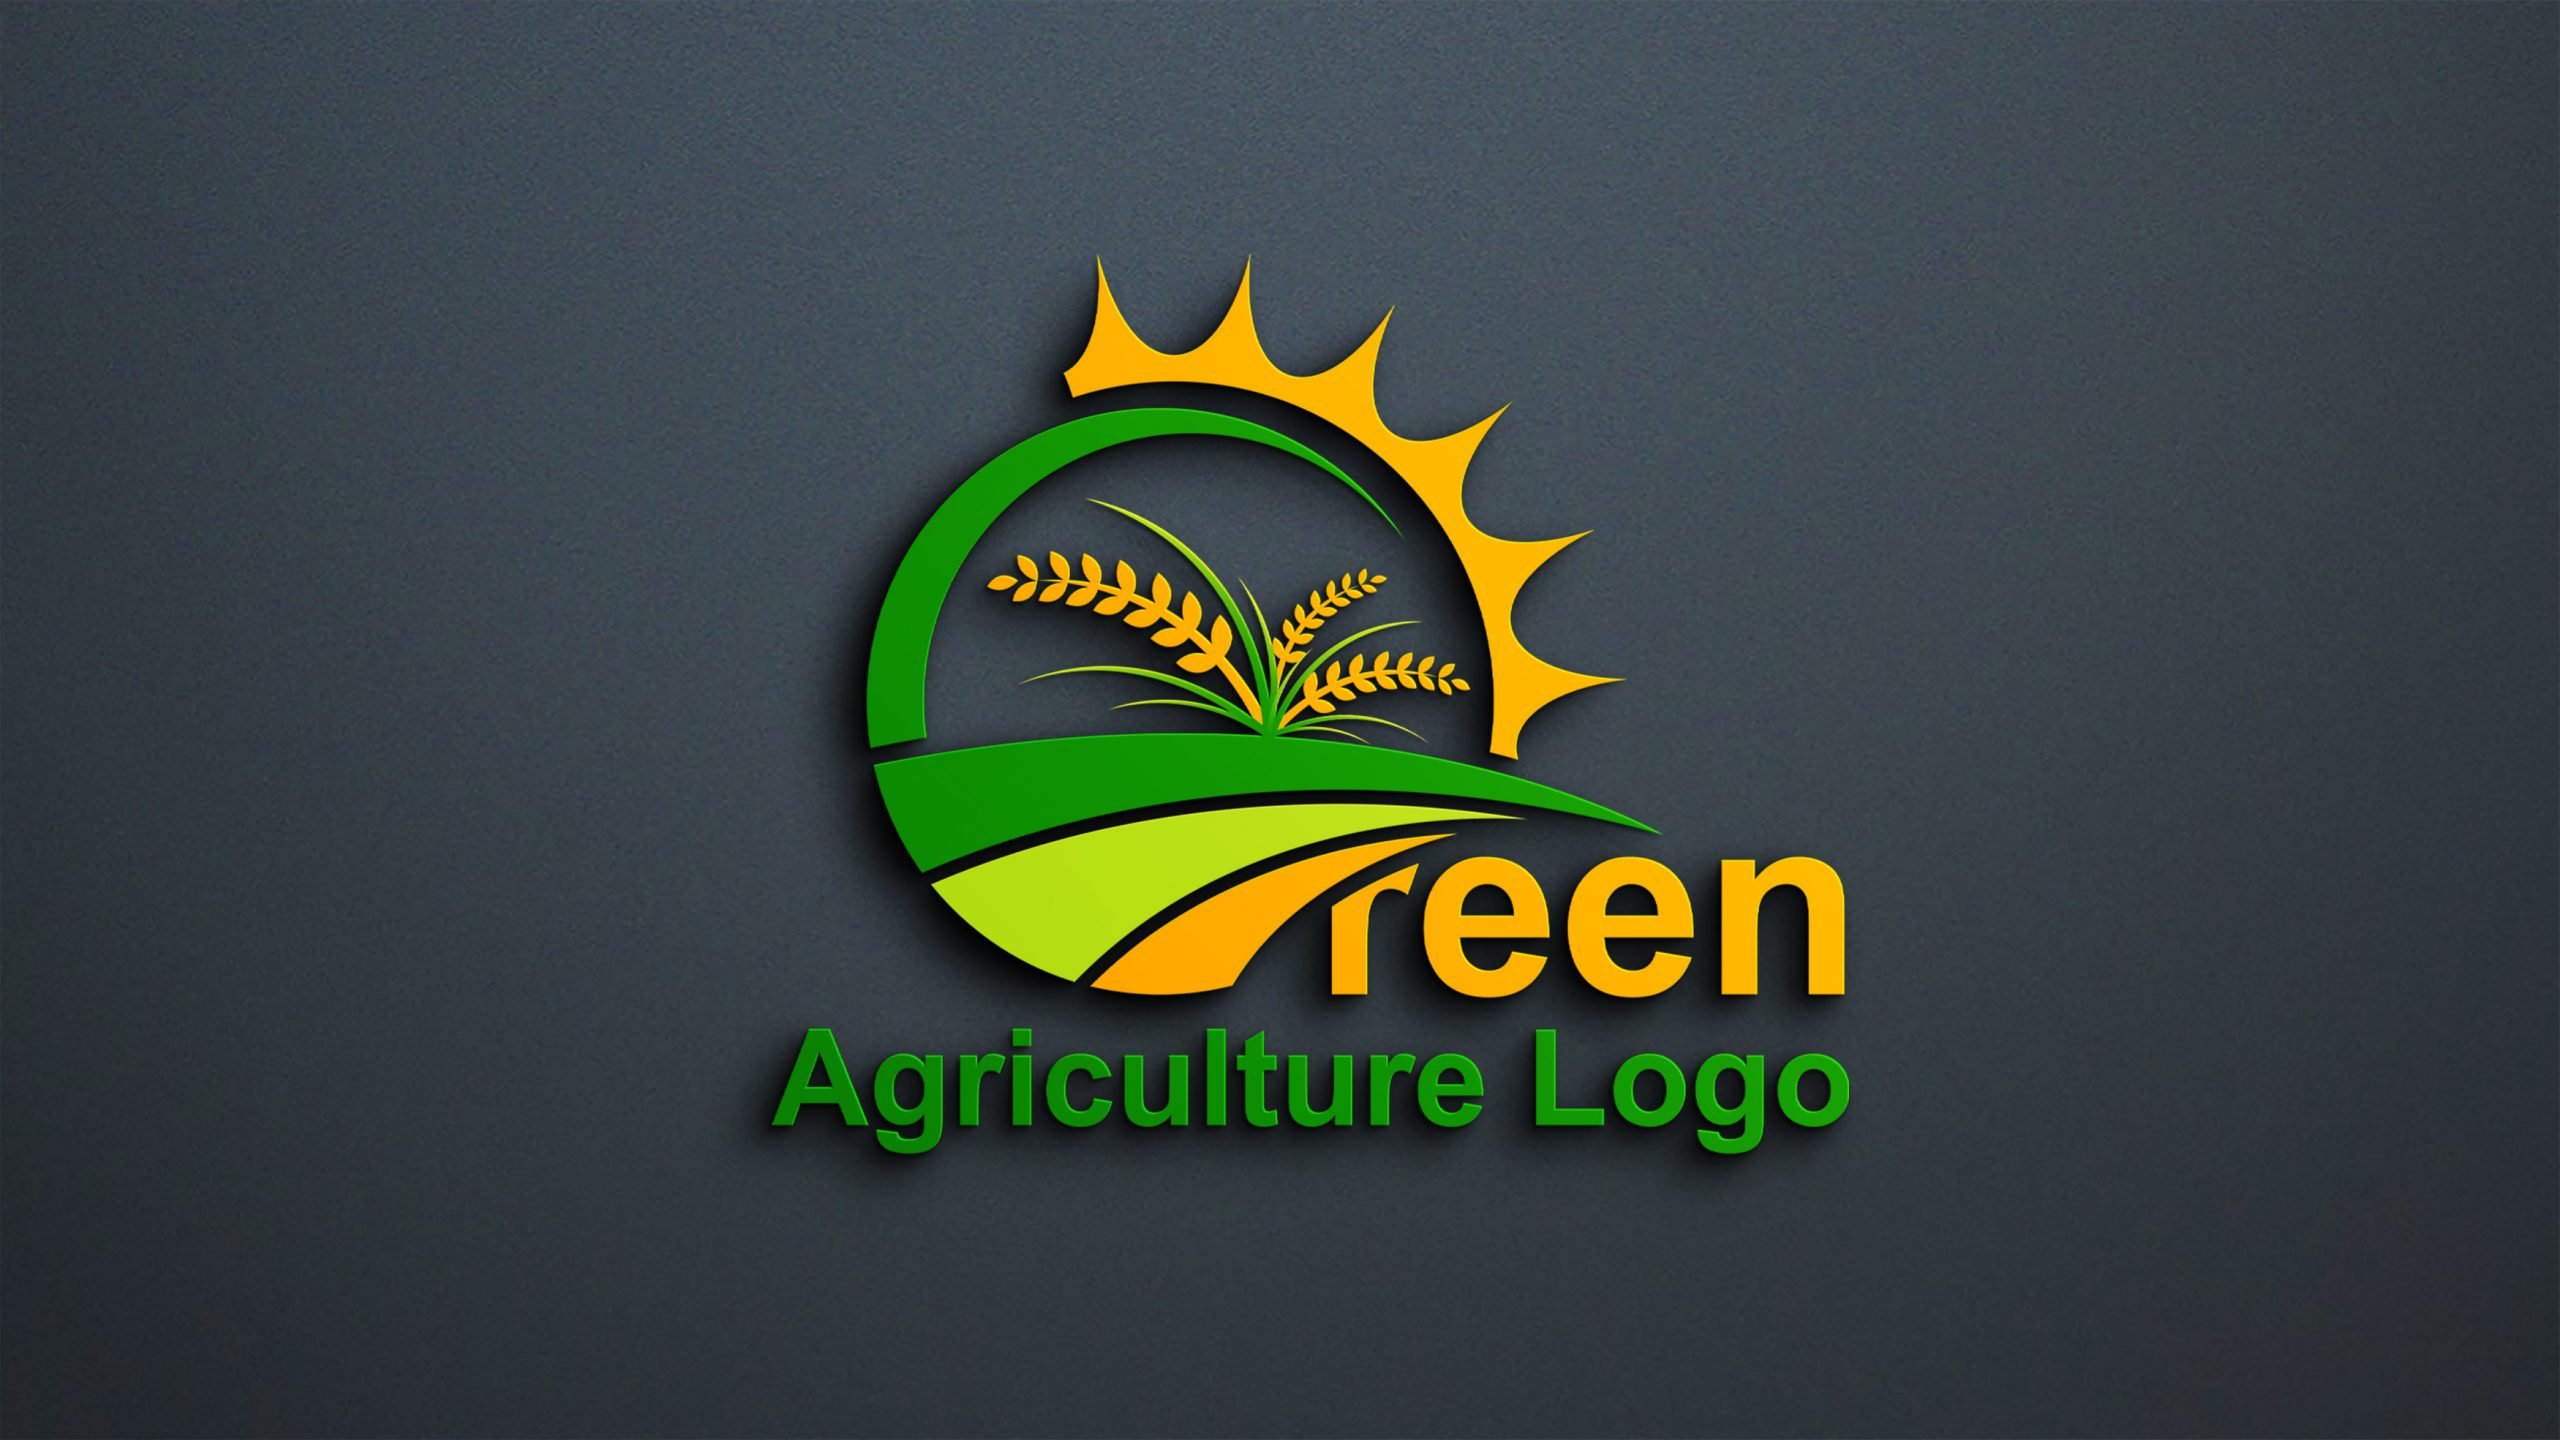 Download Pepperidge Farm Logo in SVG Vector or PNG File Format - Logo.wine